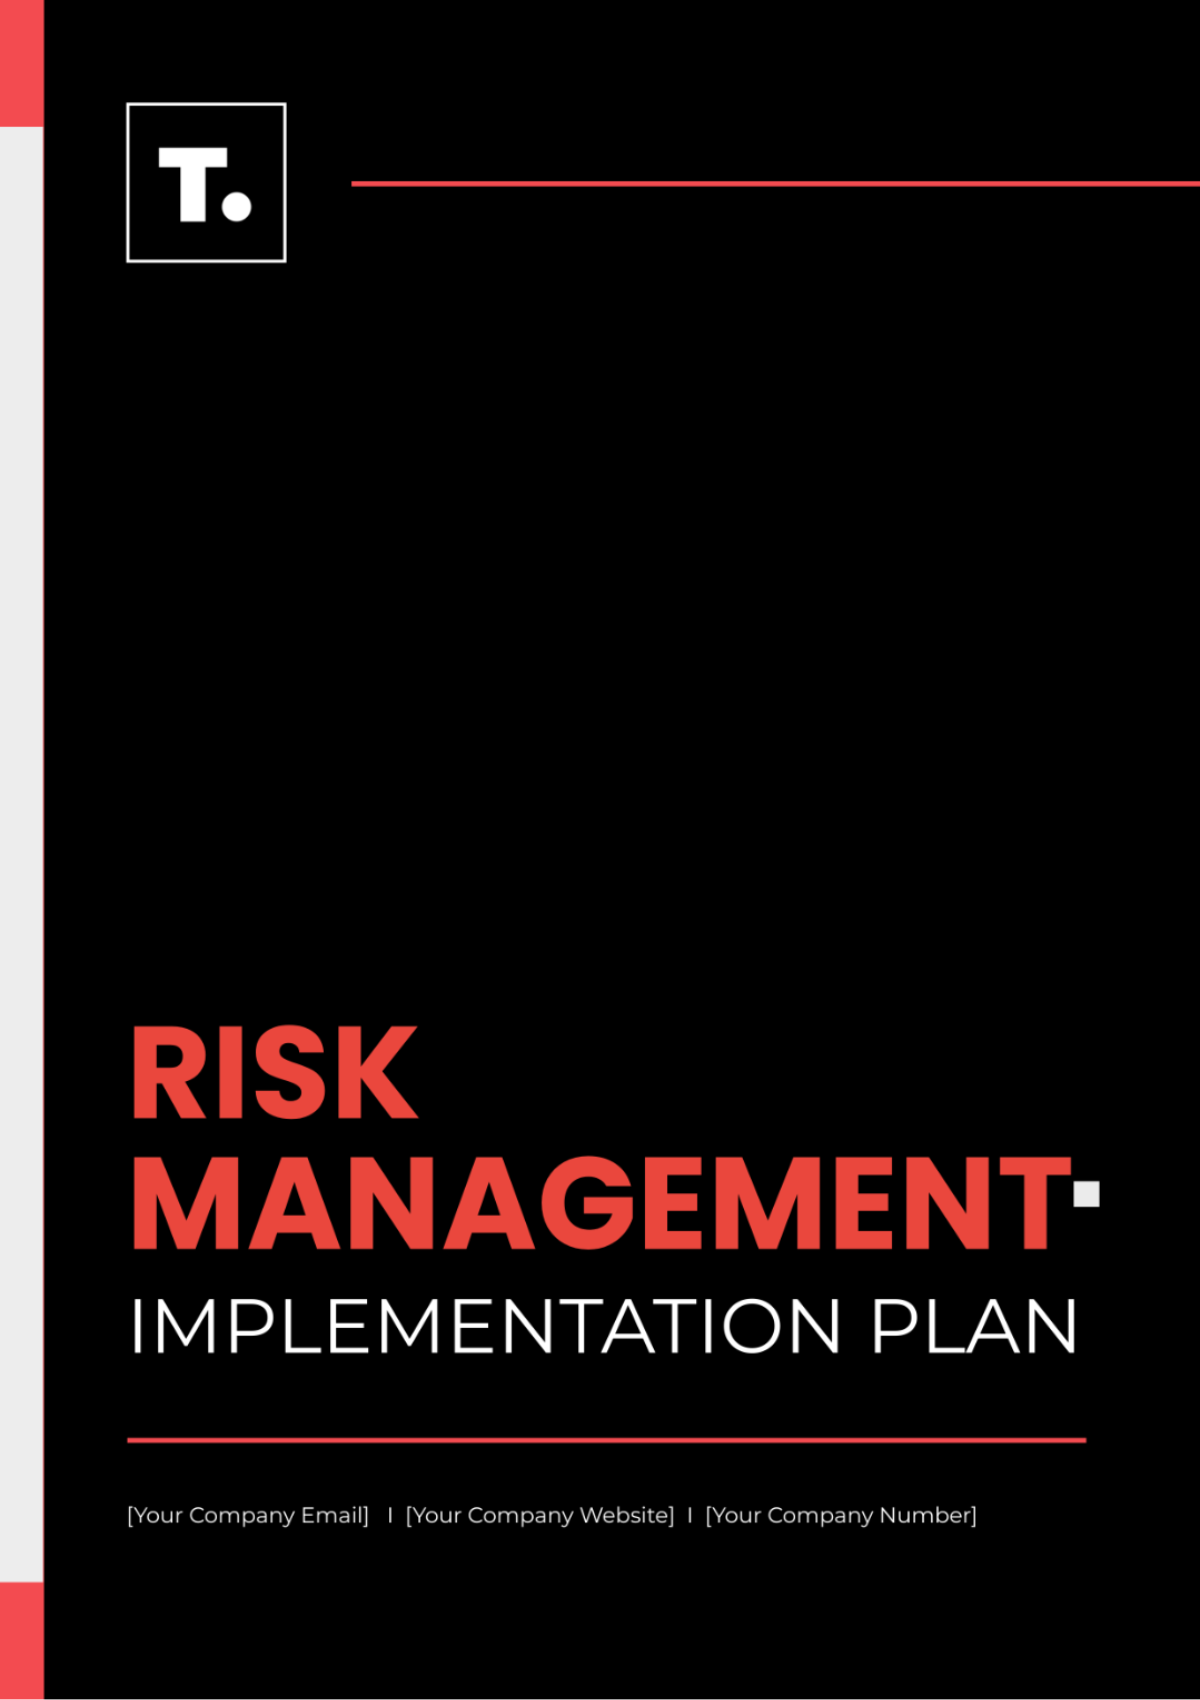 Risk Management Implementation Plan Template